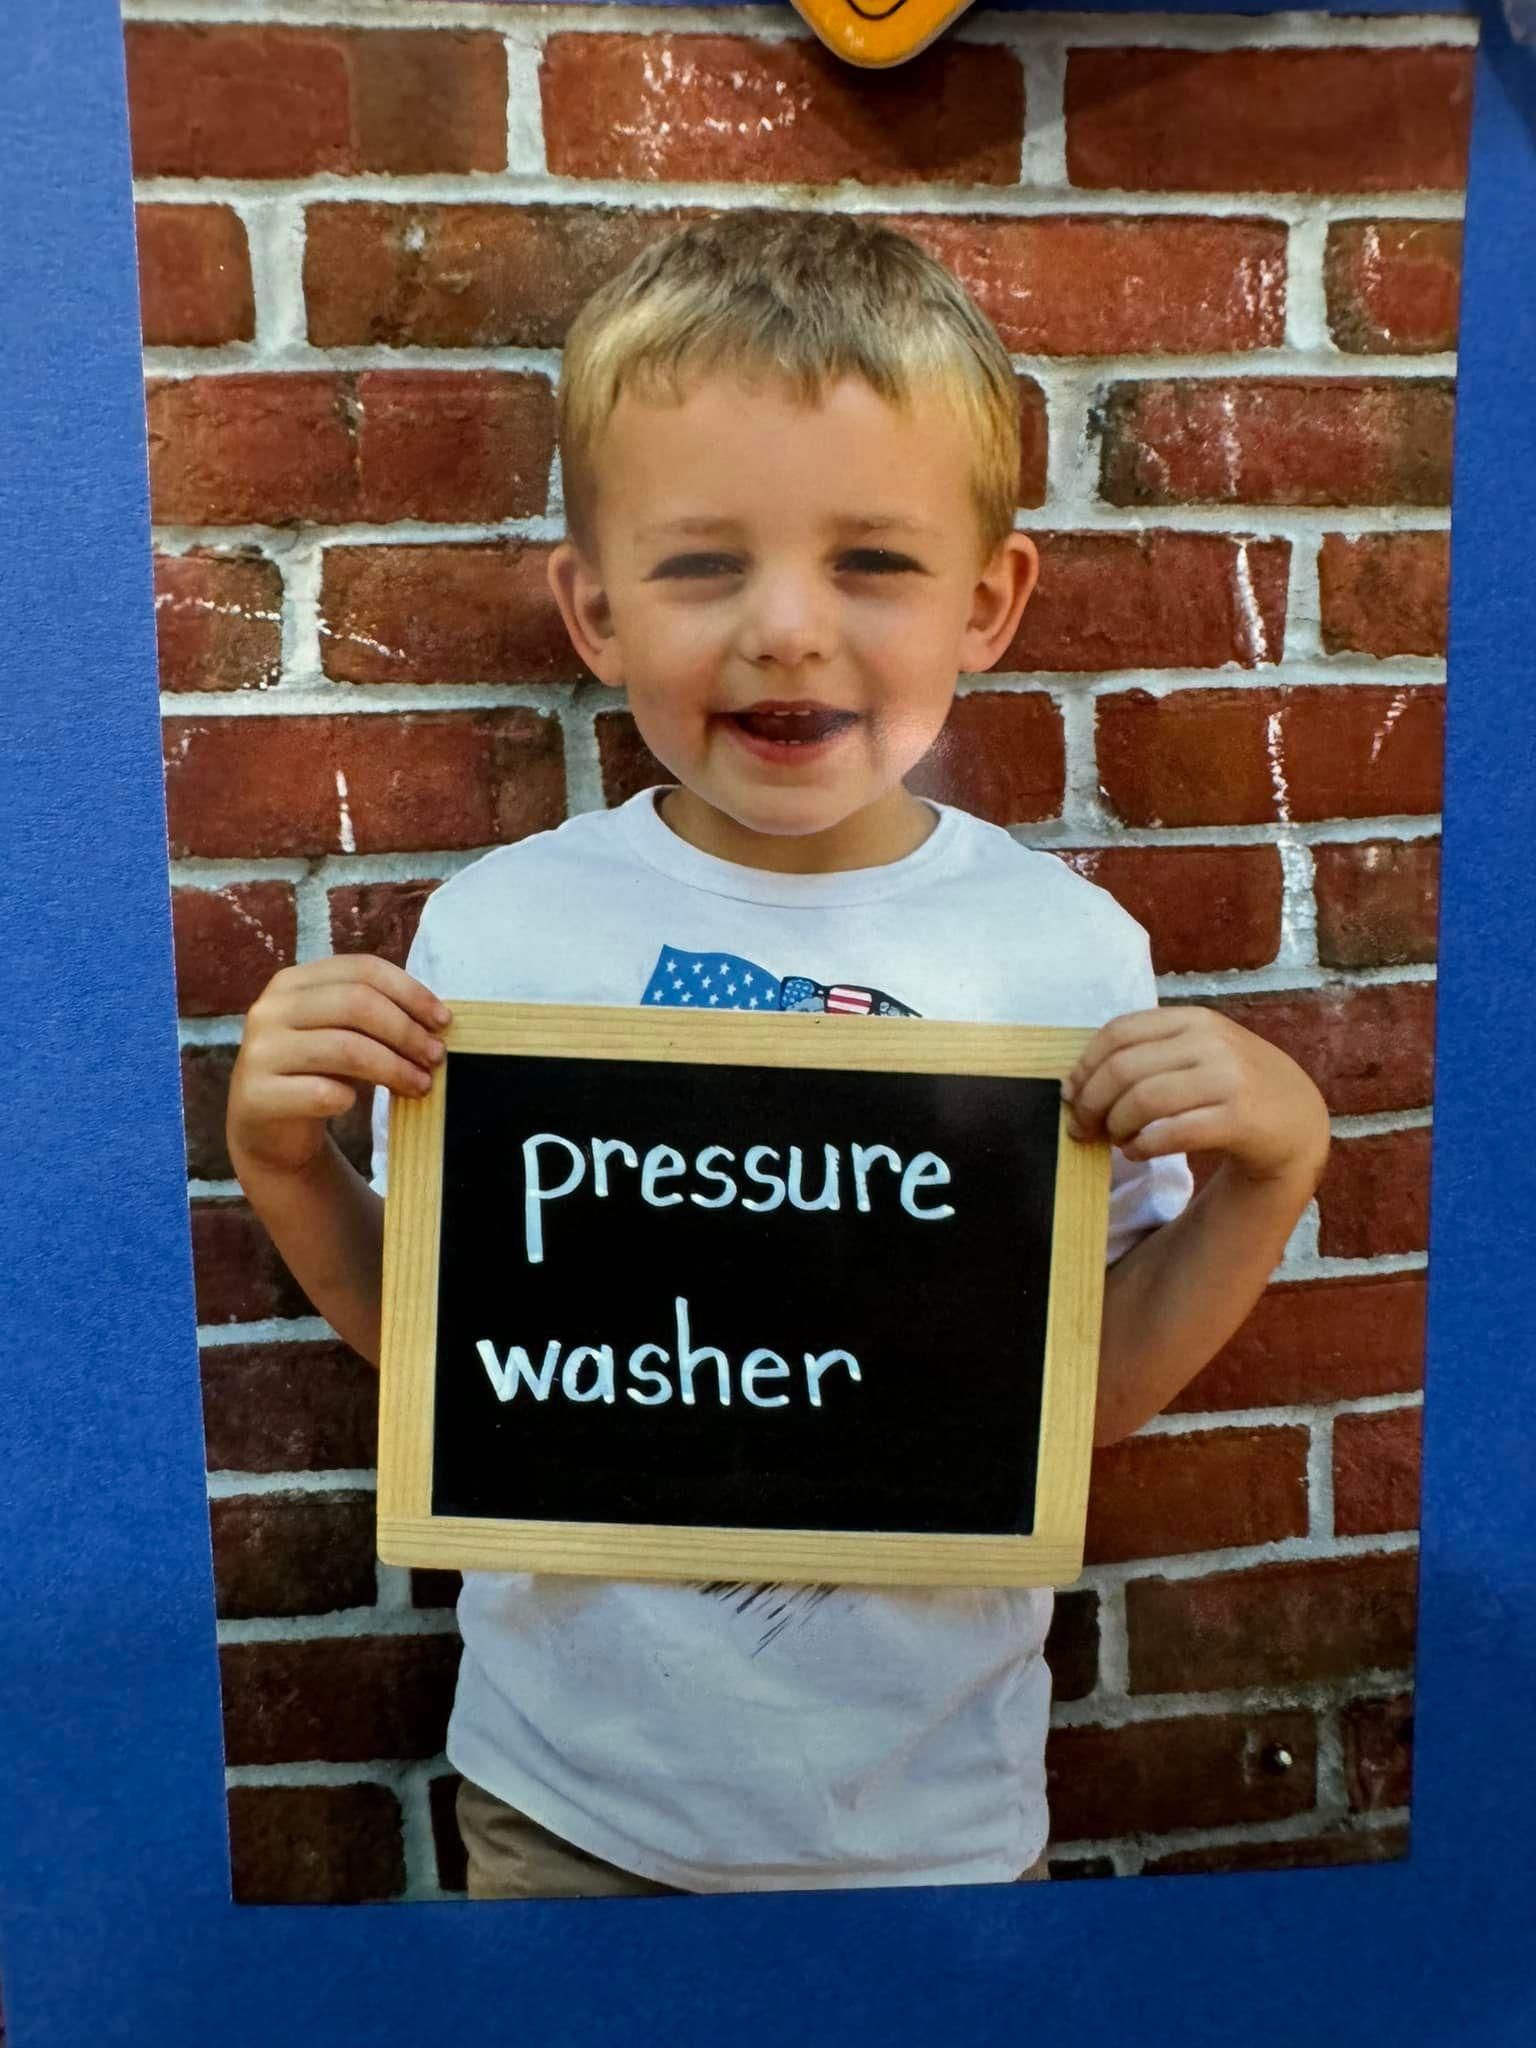  for First Responder Pressure Washing in Julington Creek Plantation, FL